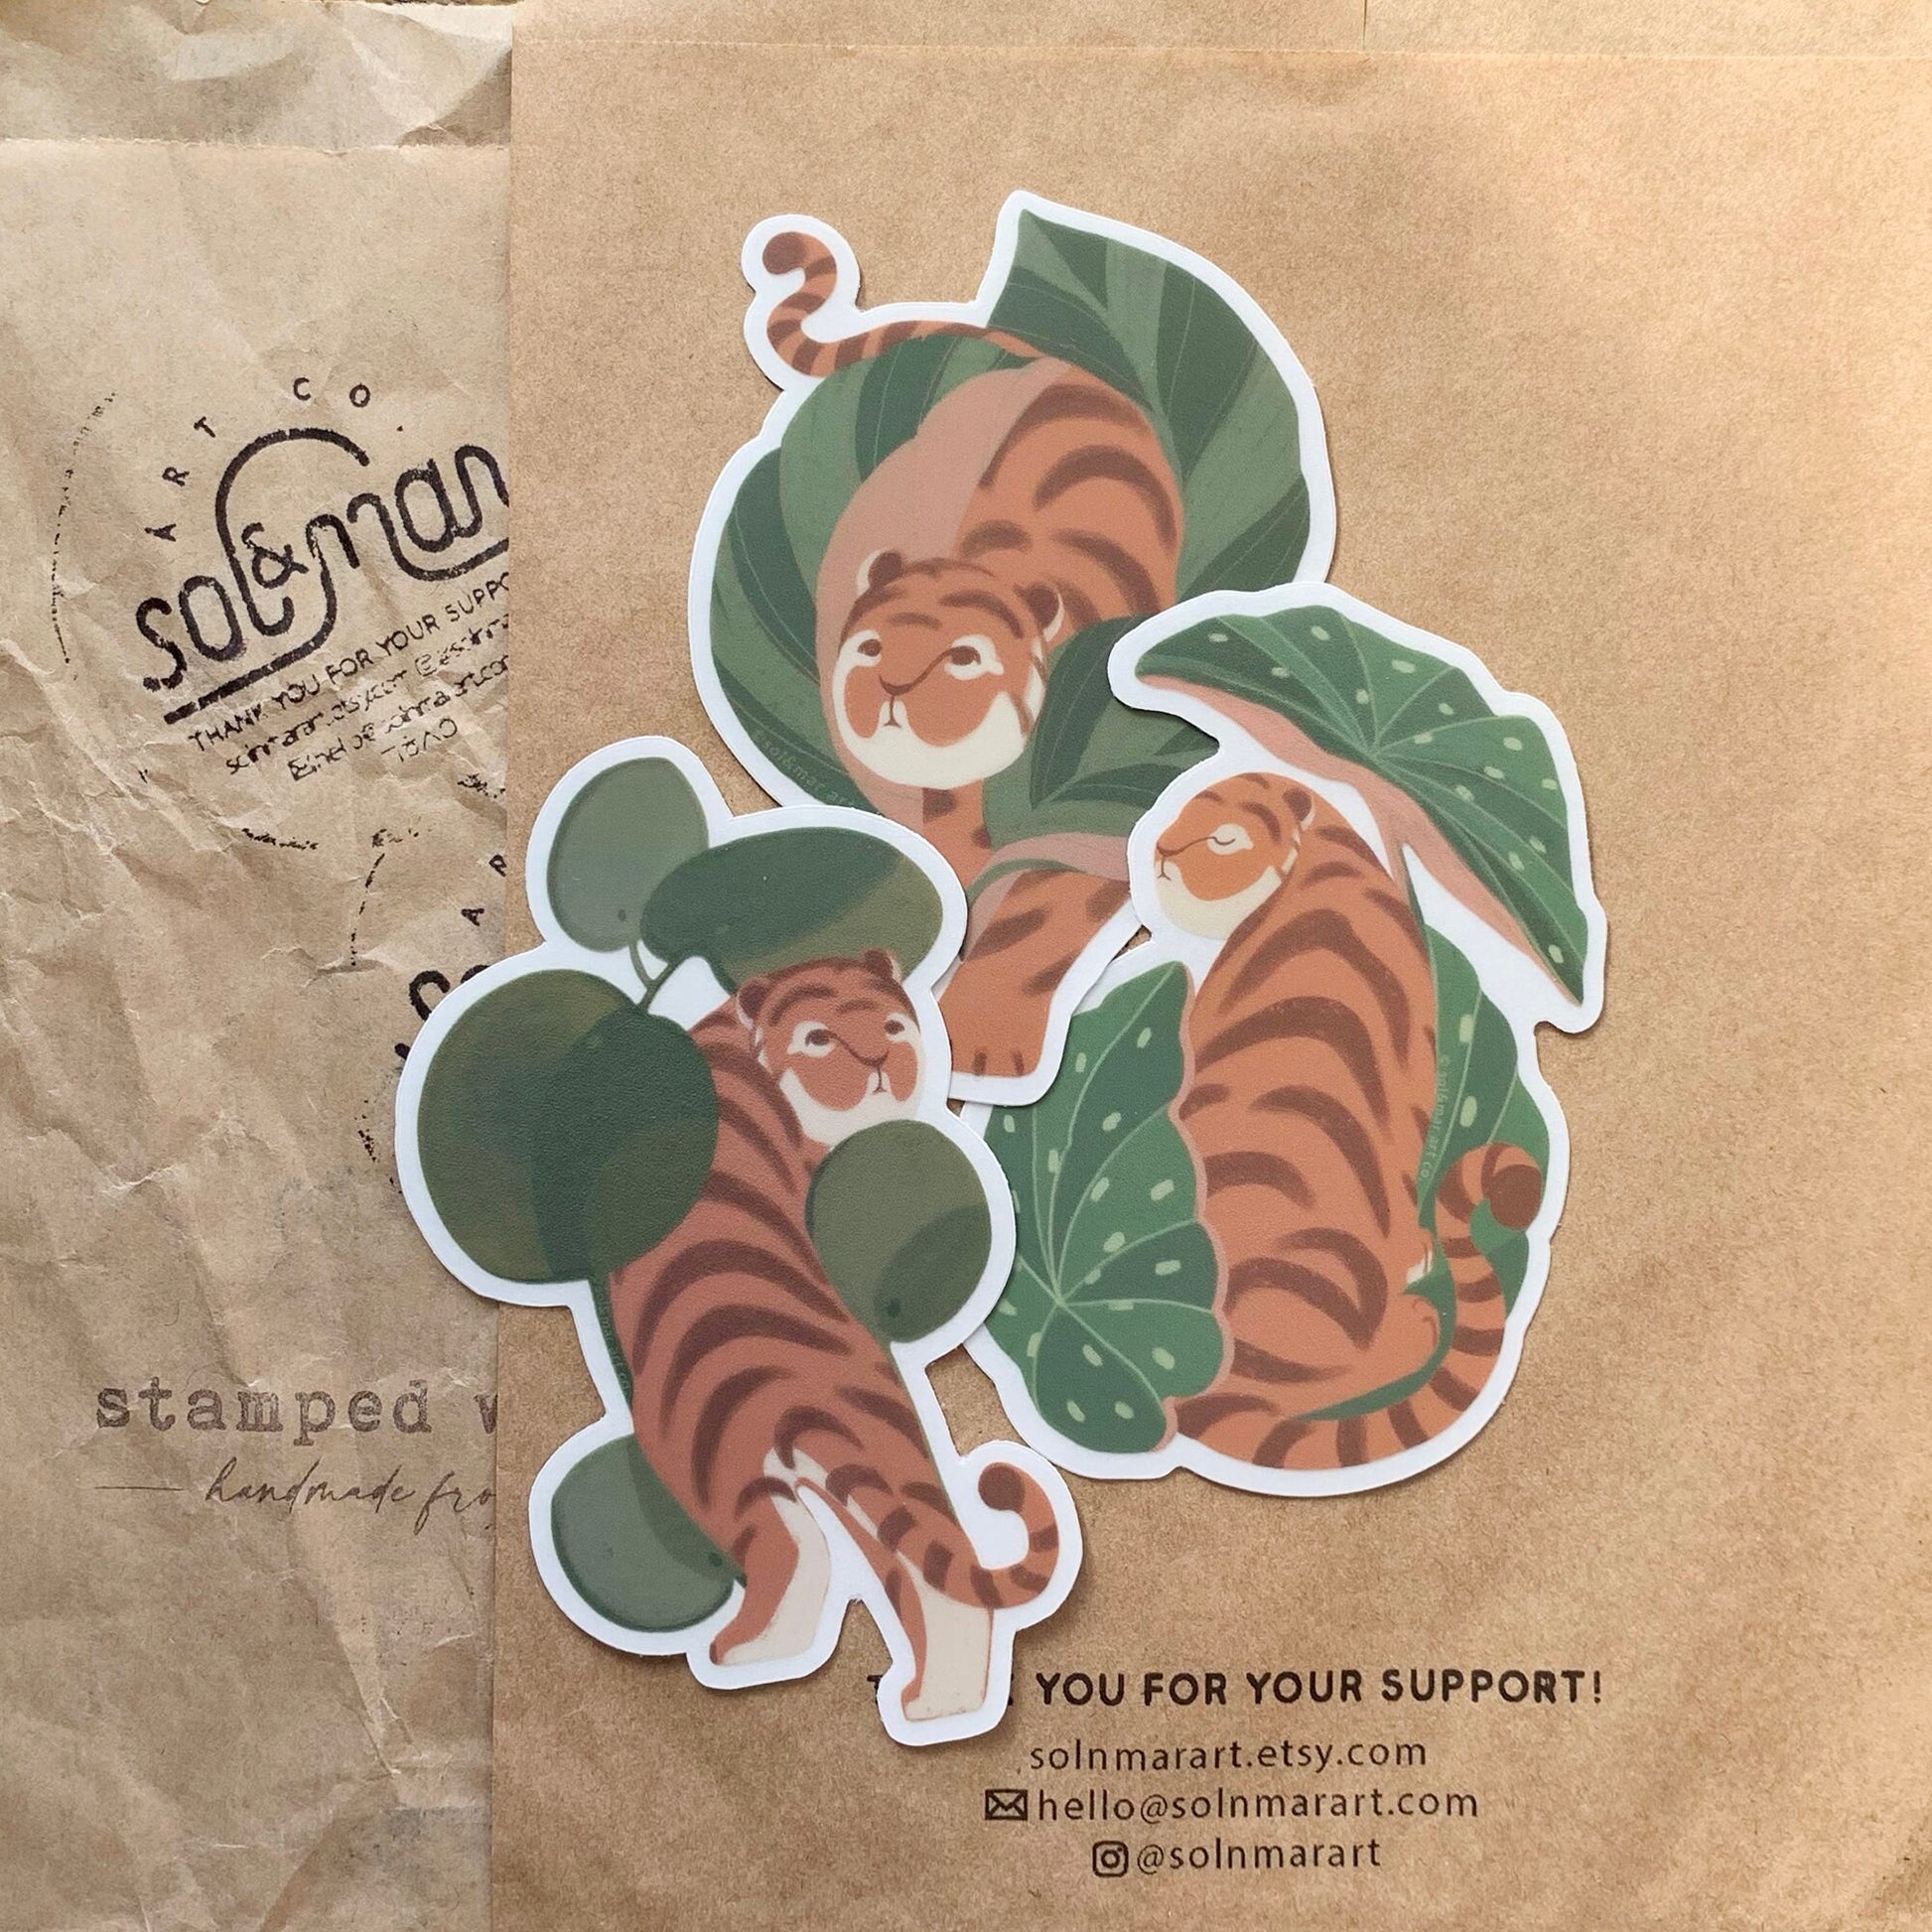 Tiger Sticker 02